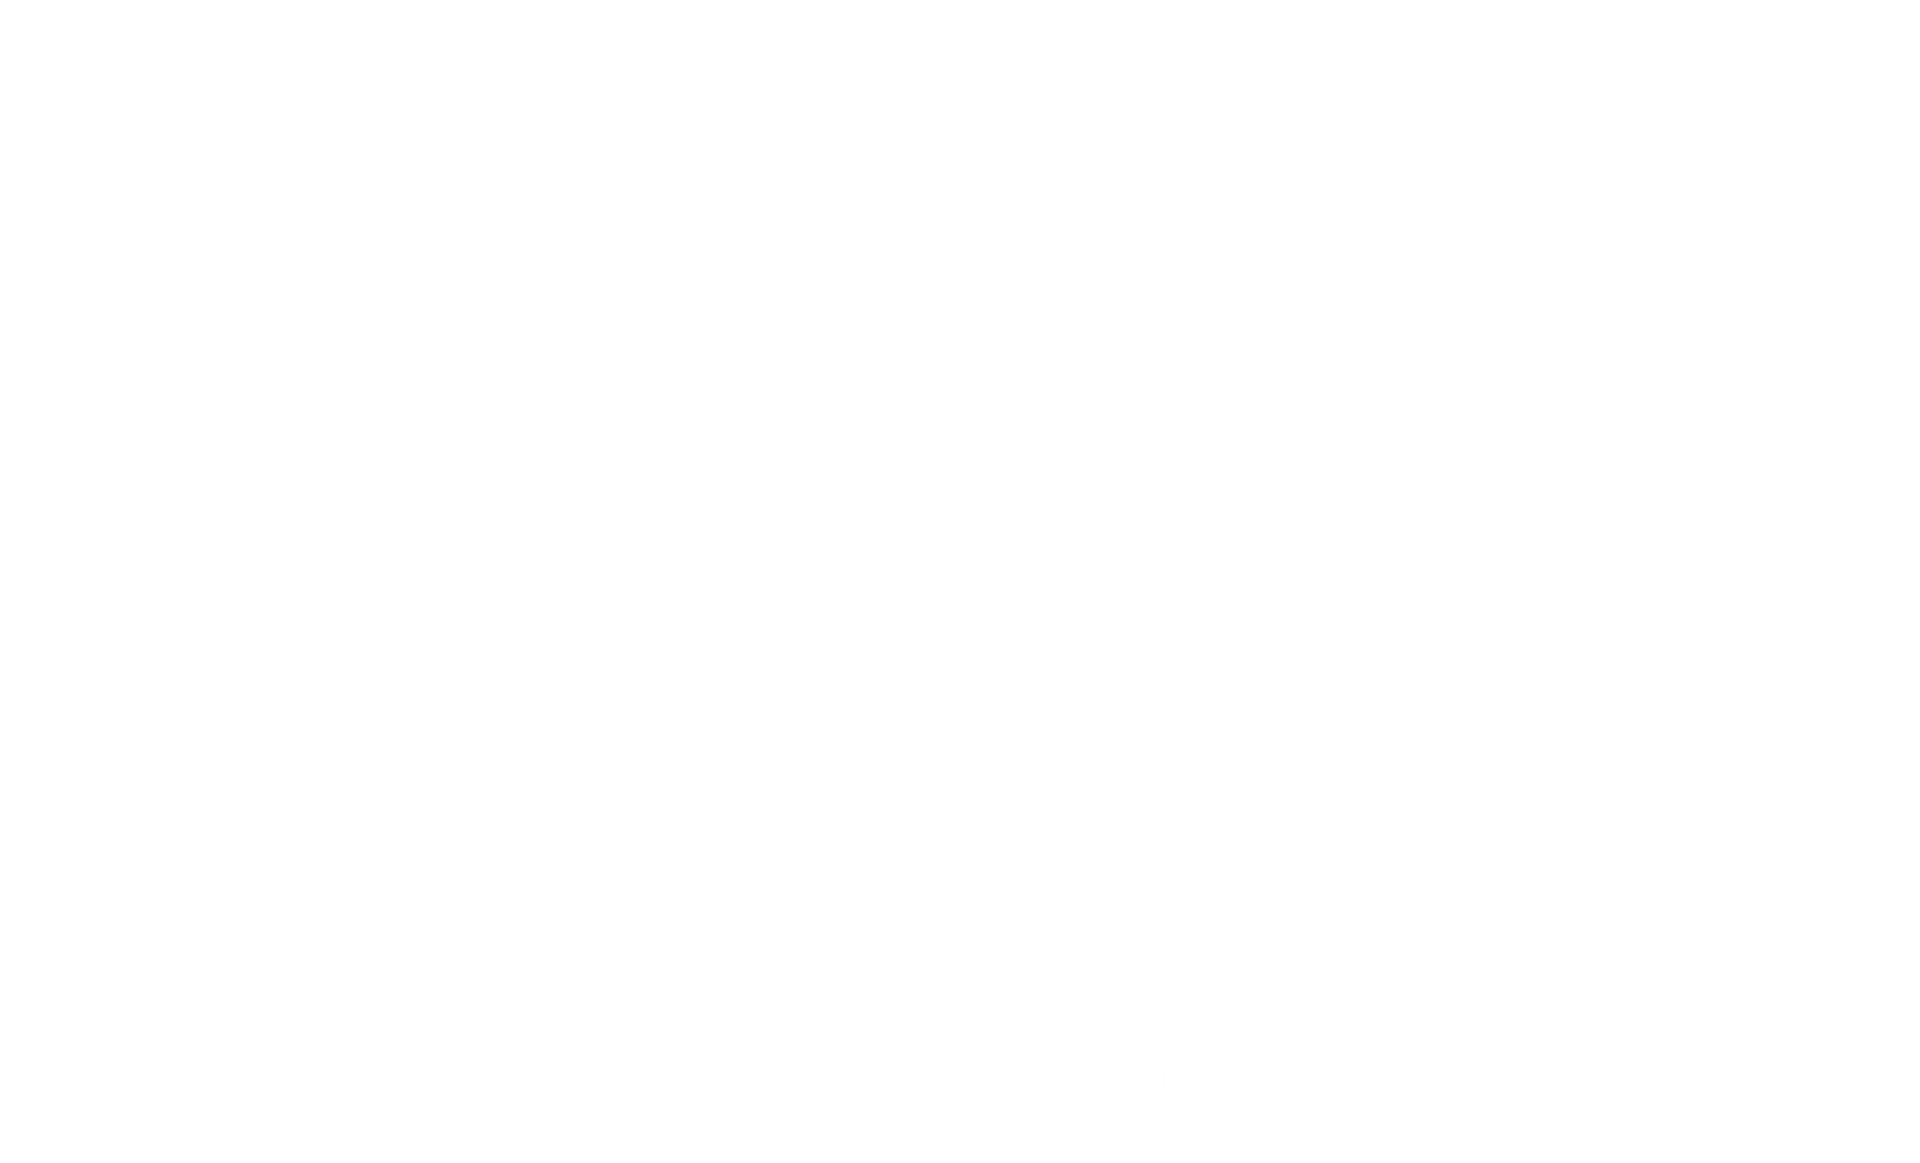 Ascent Metropolitan Naples logo.